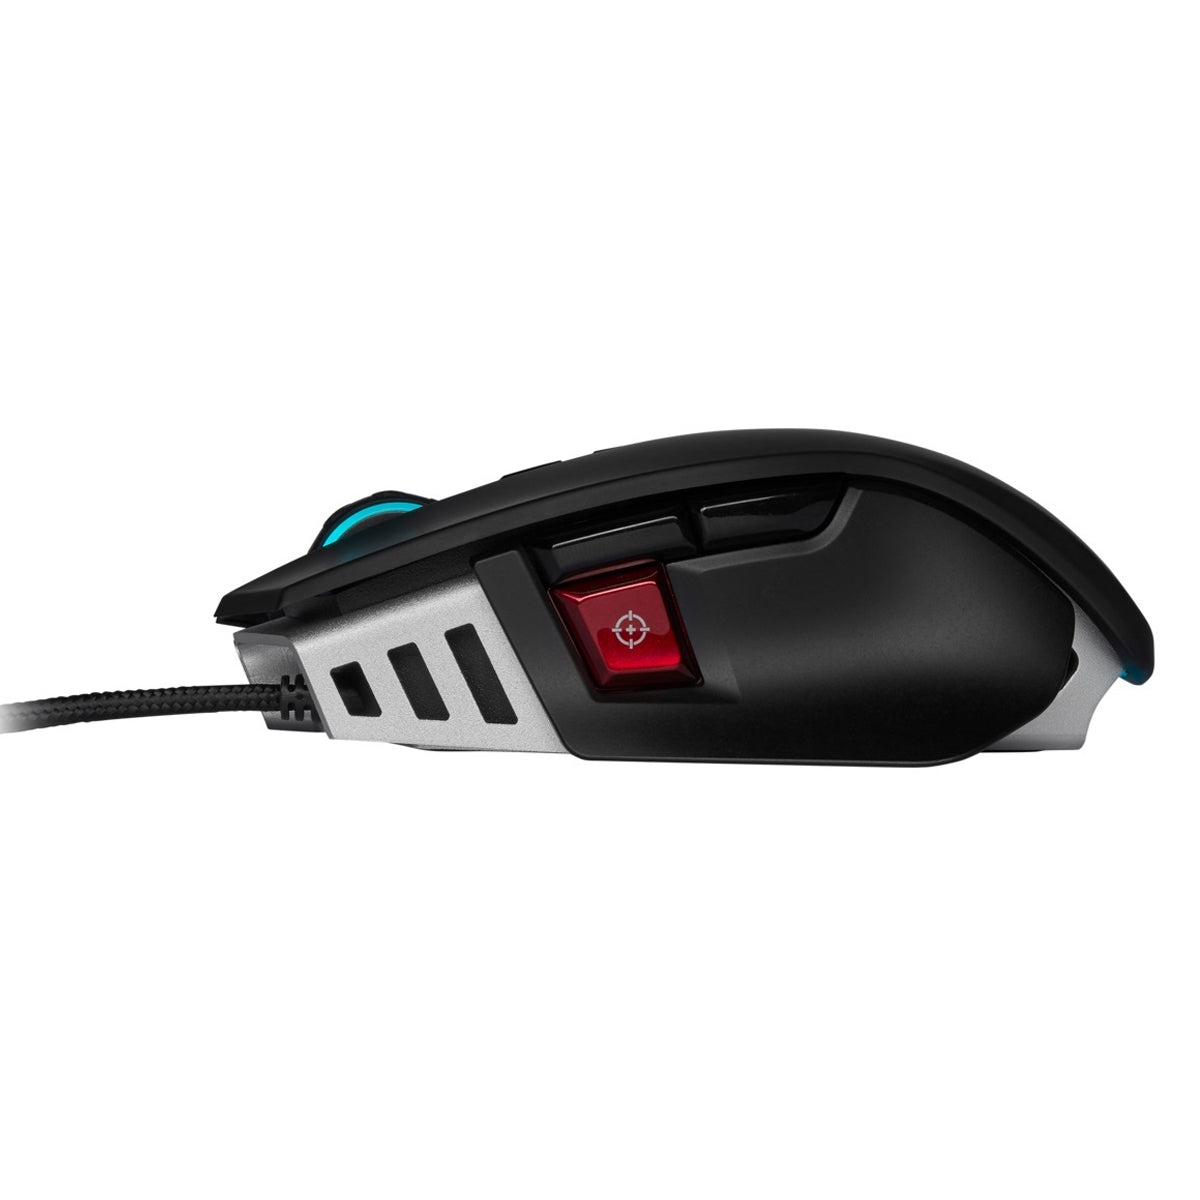 Corsair M65 RGB ELITE, Optical, 18000DPI Tunable FPS Gaming Mouse - Black